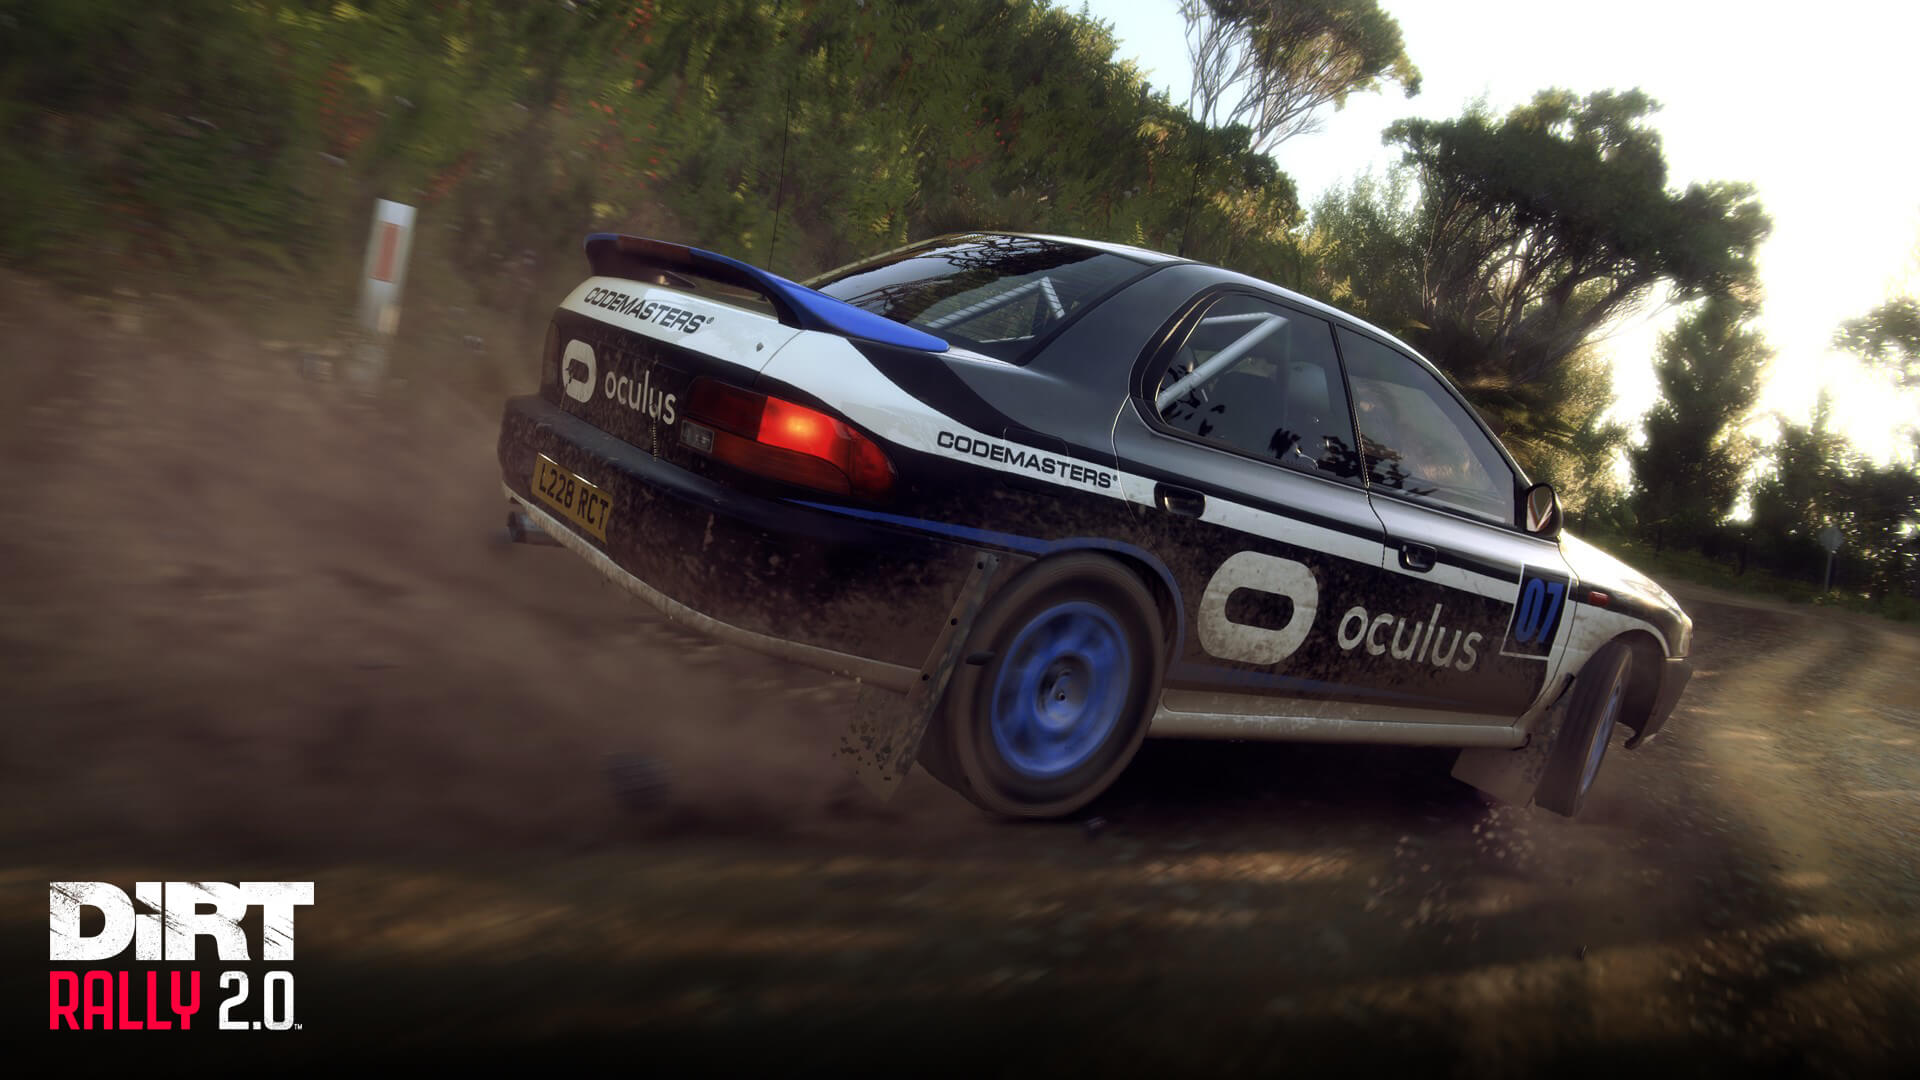 Vr rally. Subaru Impreza Dirt Rally 2.0. Dirt Rally 2.0 Subaru. Dirt Rally VR 2. Subaru 2015 Dirt Rally 2.